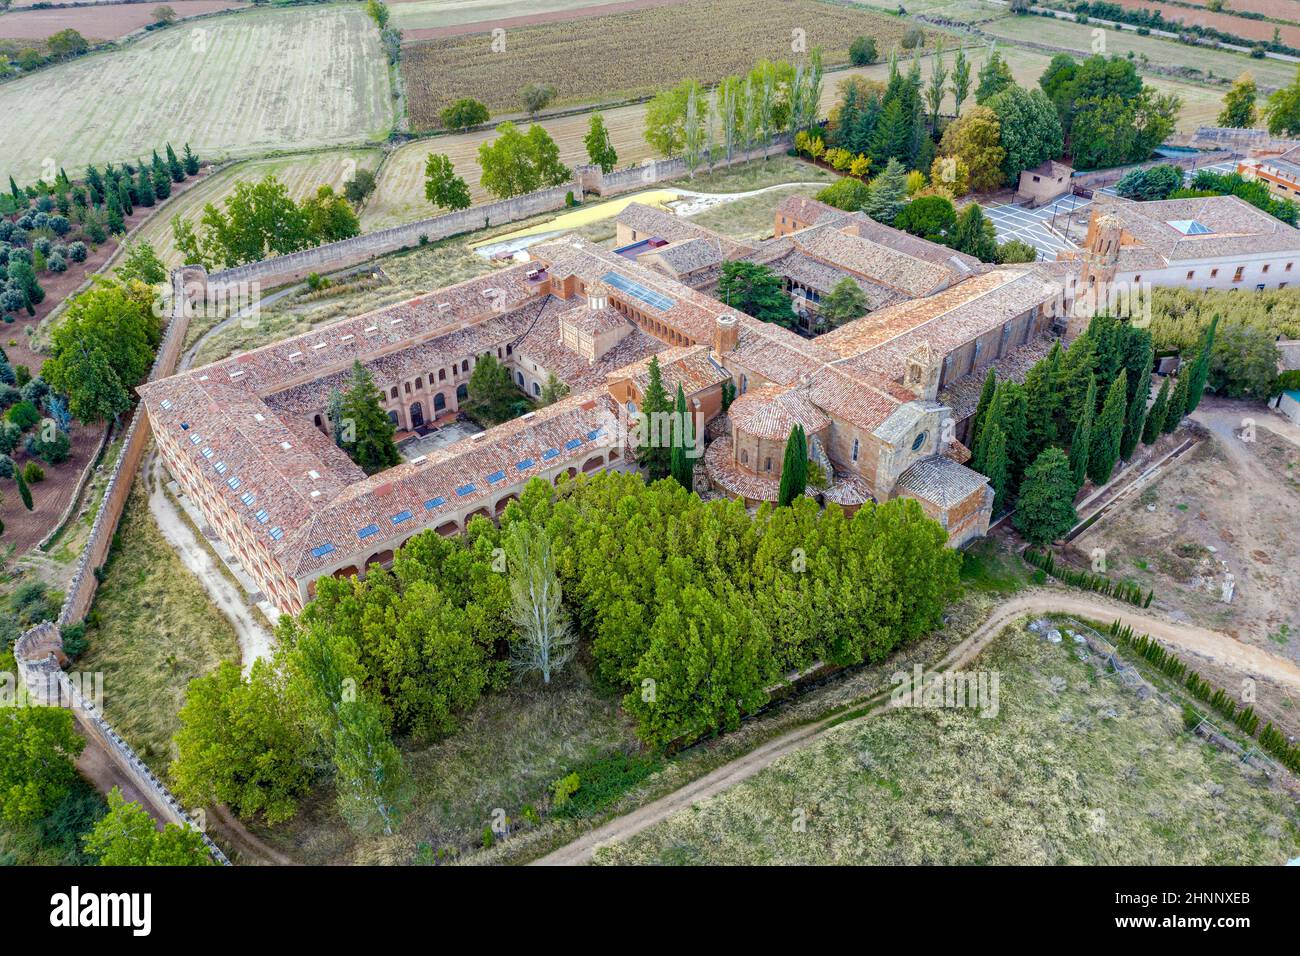 Aerial view of cloisters in the Abbey Royal Monastery of Santa Maria de Veruela, Vera de Moncayo, Zaragoza, Aragon, Spain Stock Photo